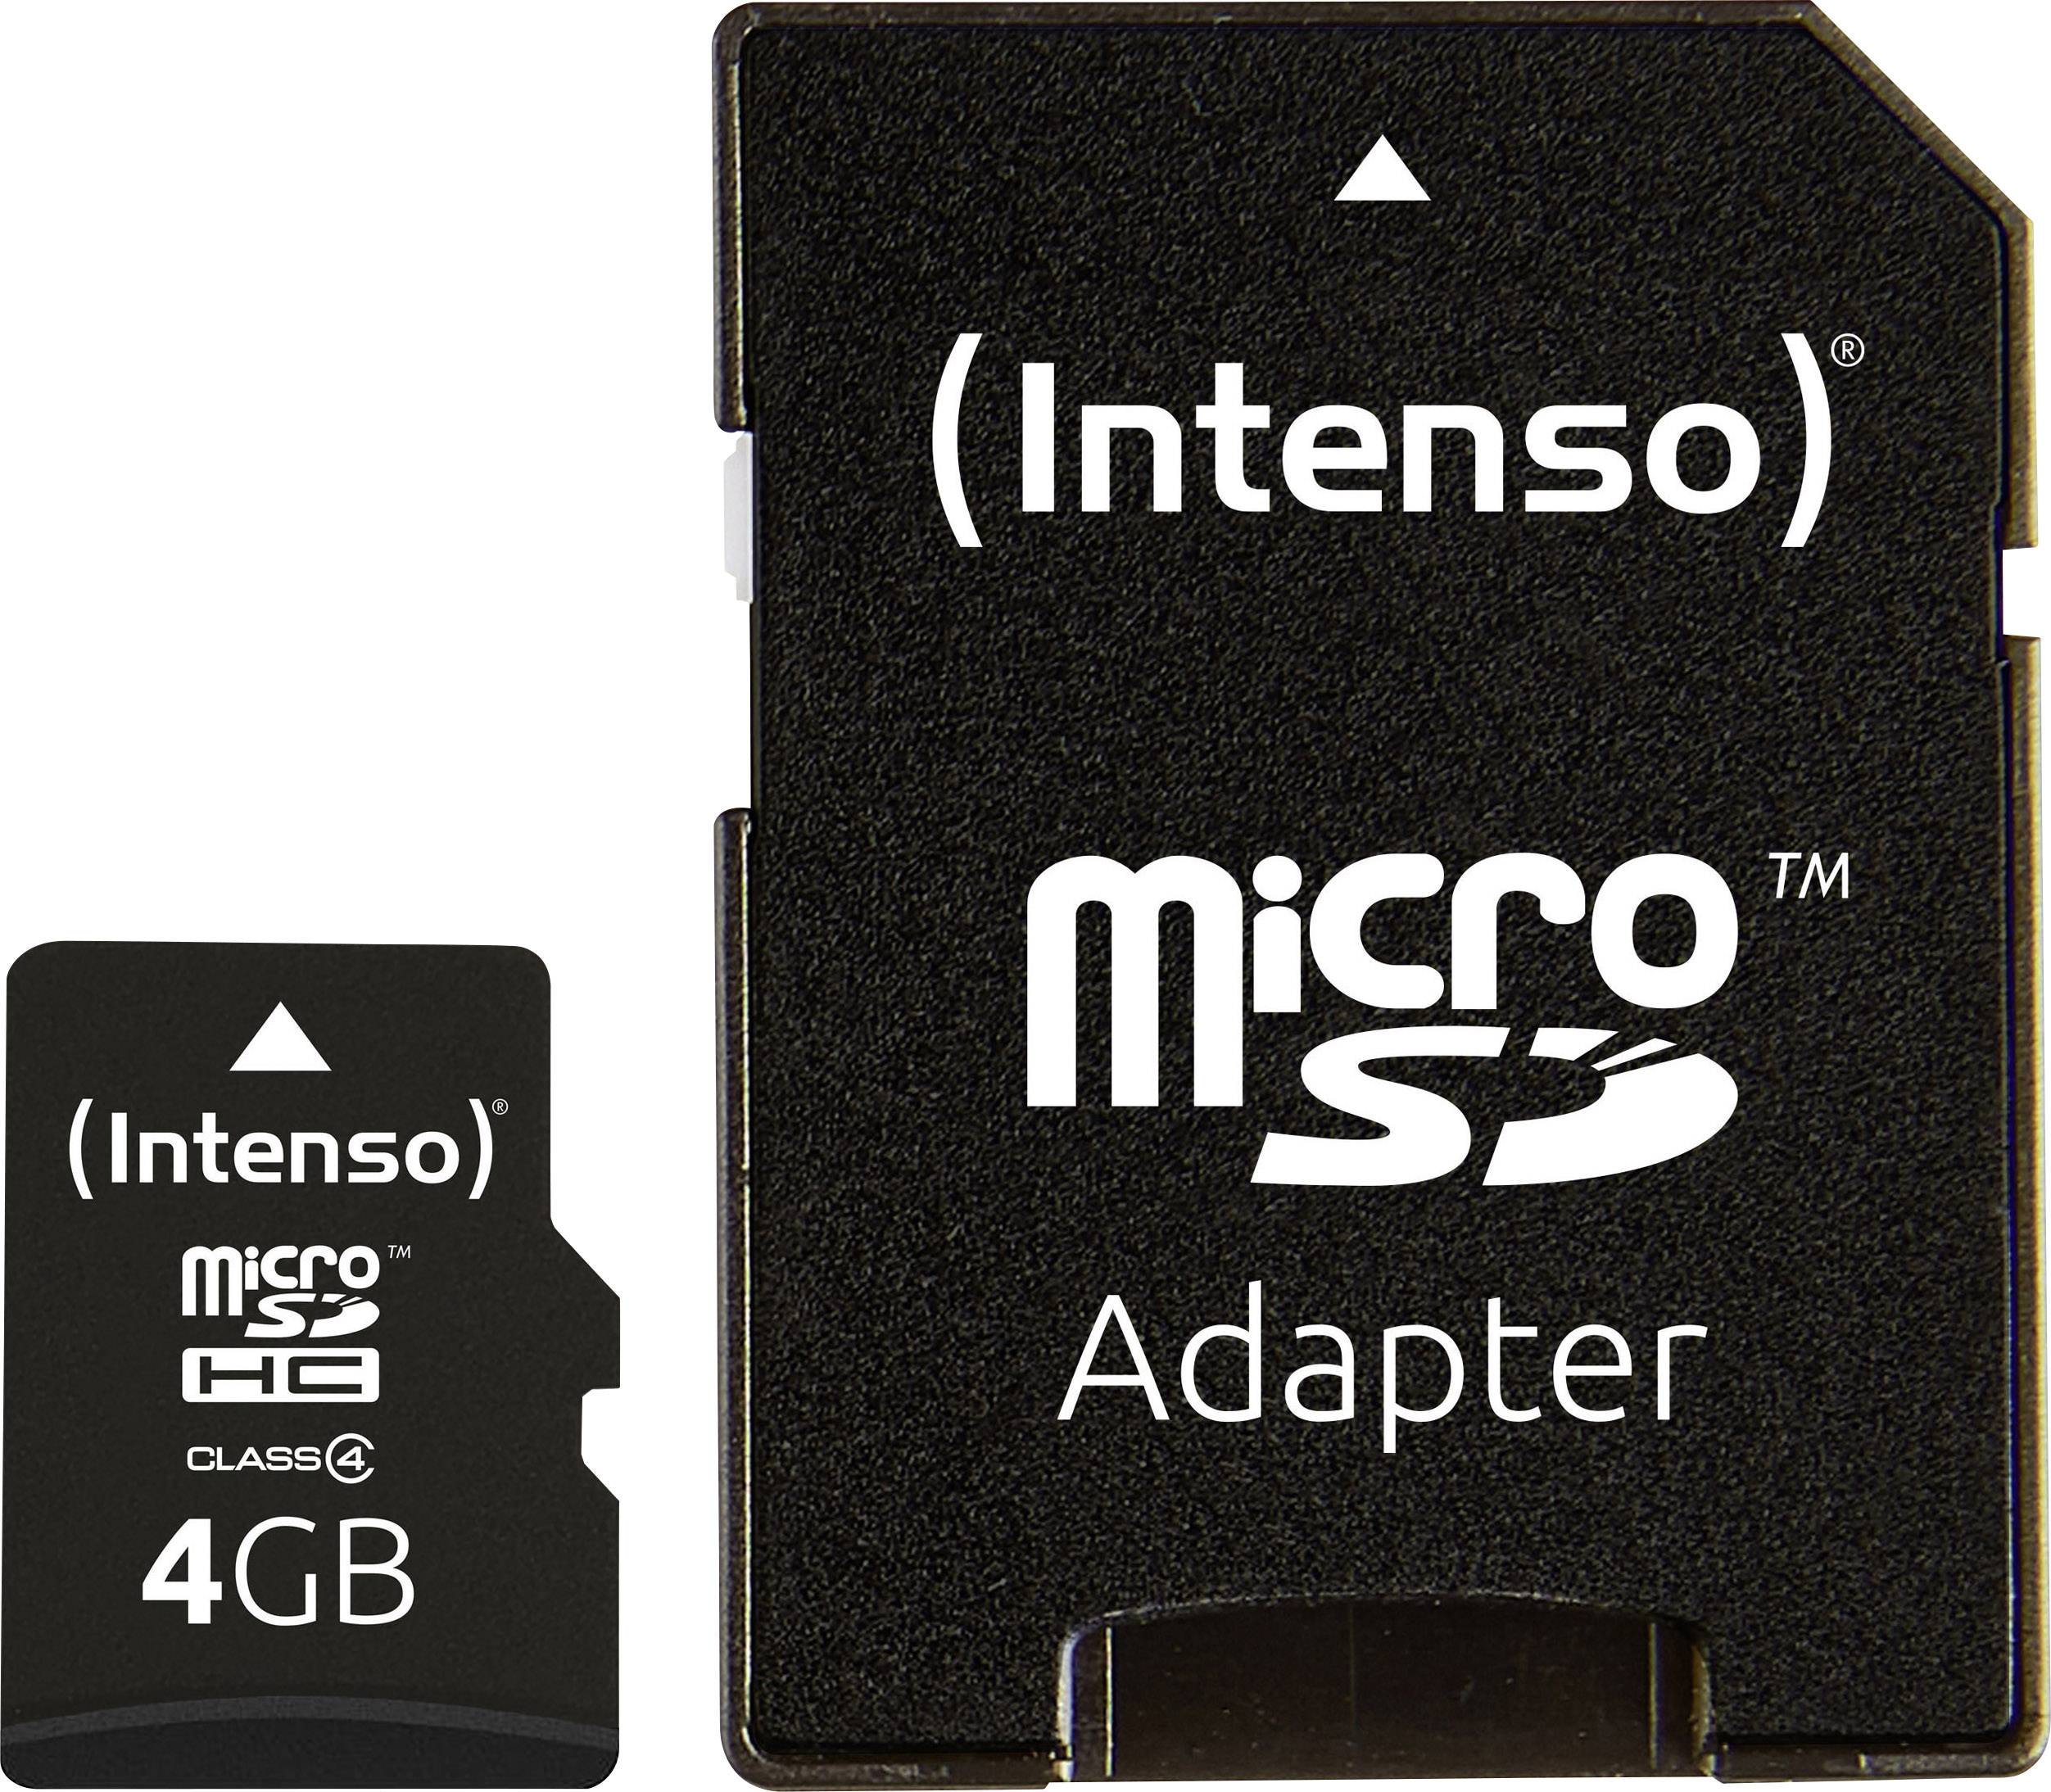 barrière in de buurt Offer Intenso 4 GB Micro SDHC-Card microSDHC-kaart 4 GB Class 4 Incl. SD-adapter  kopen ? Conrad Electronic